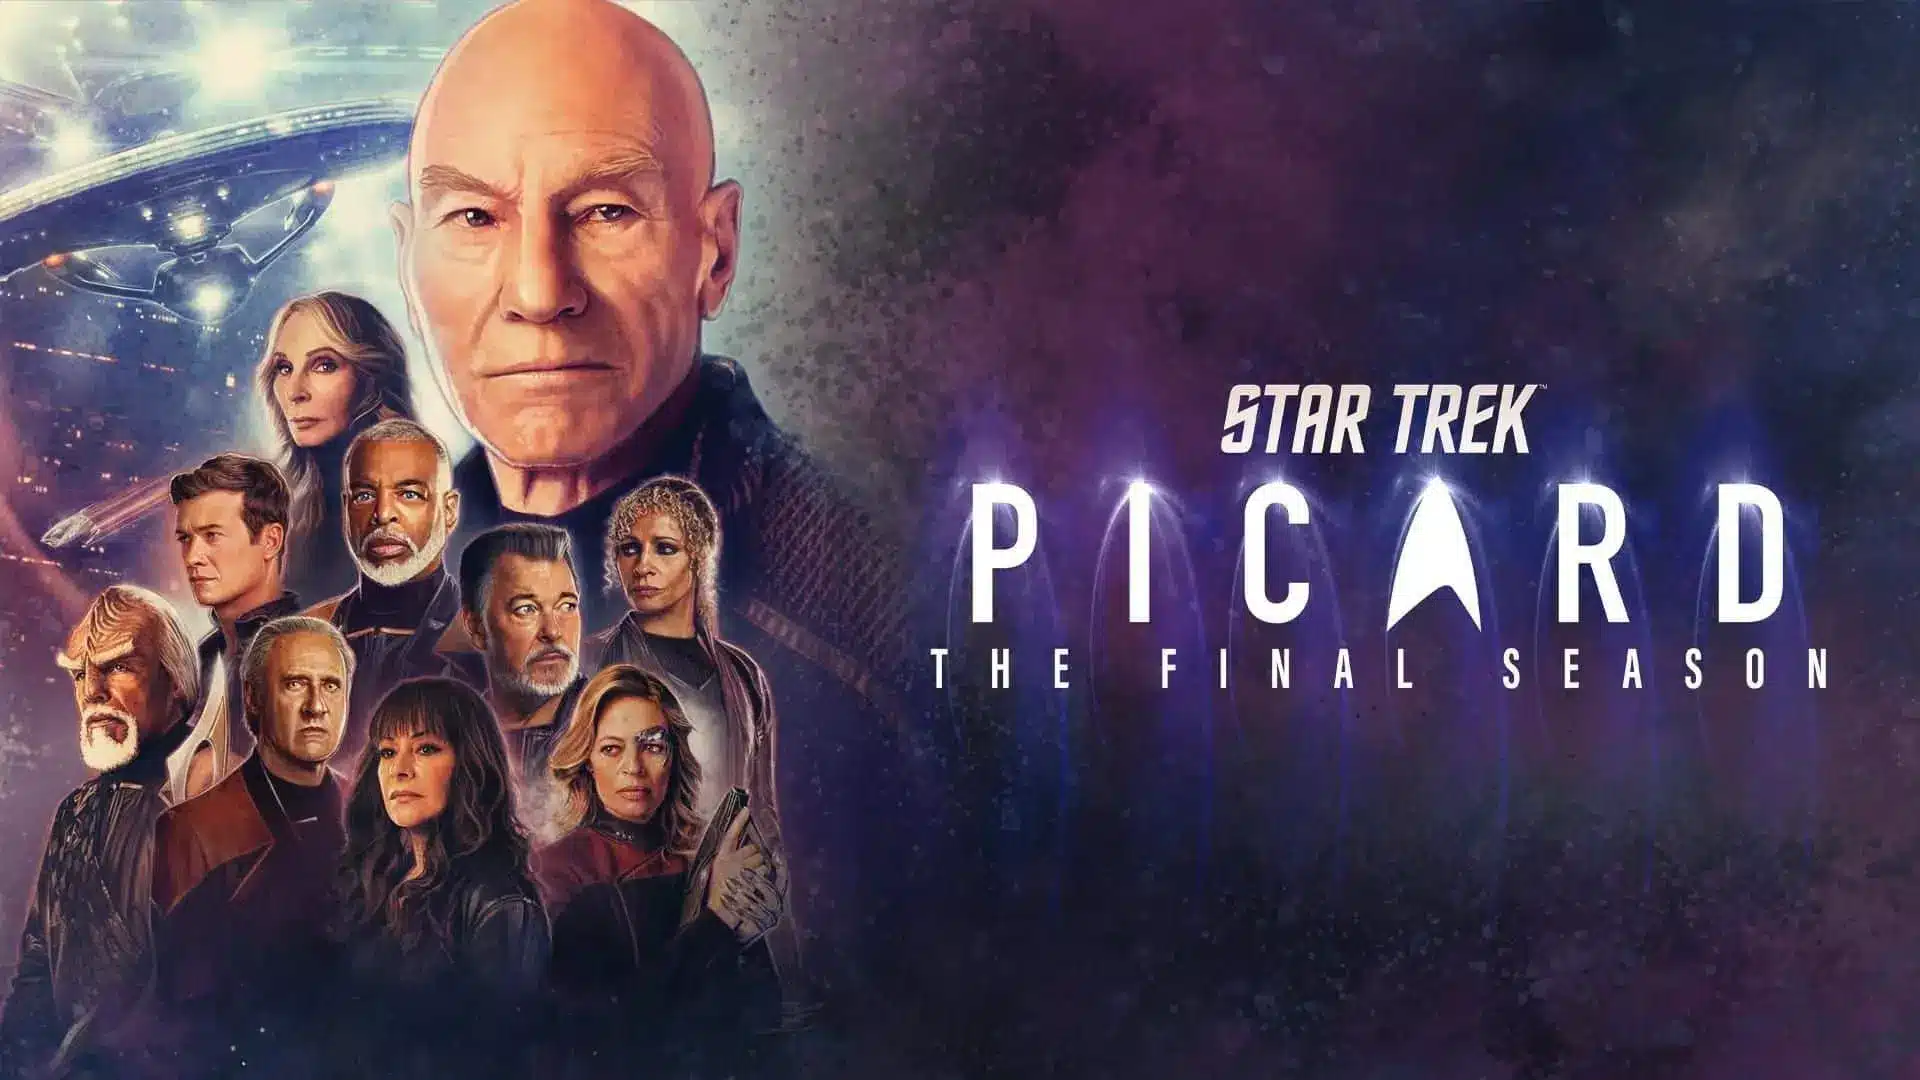 Star Trek: Picard Season 3 Episode 11 Preview and spoilers